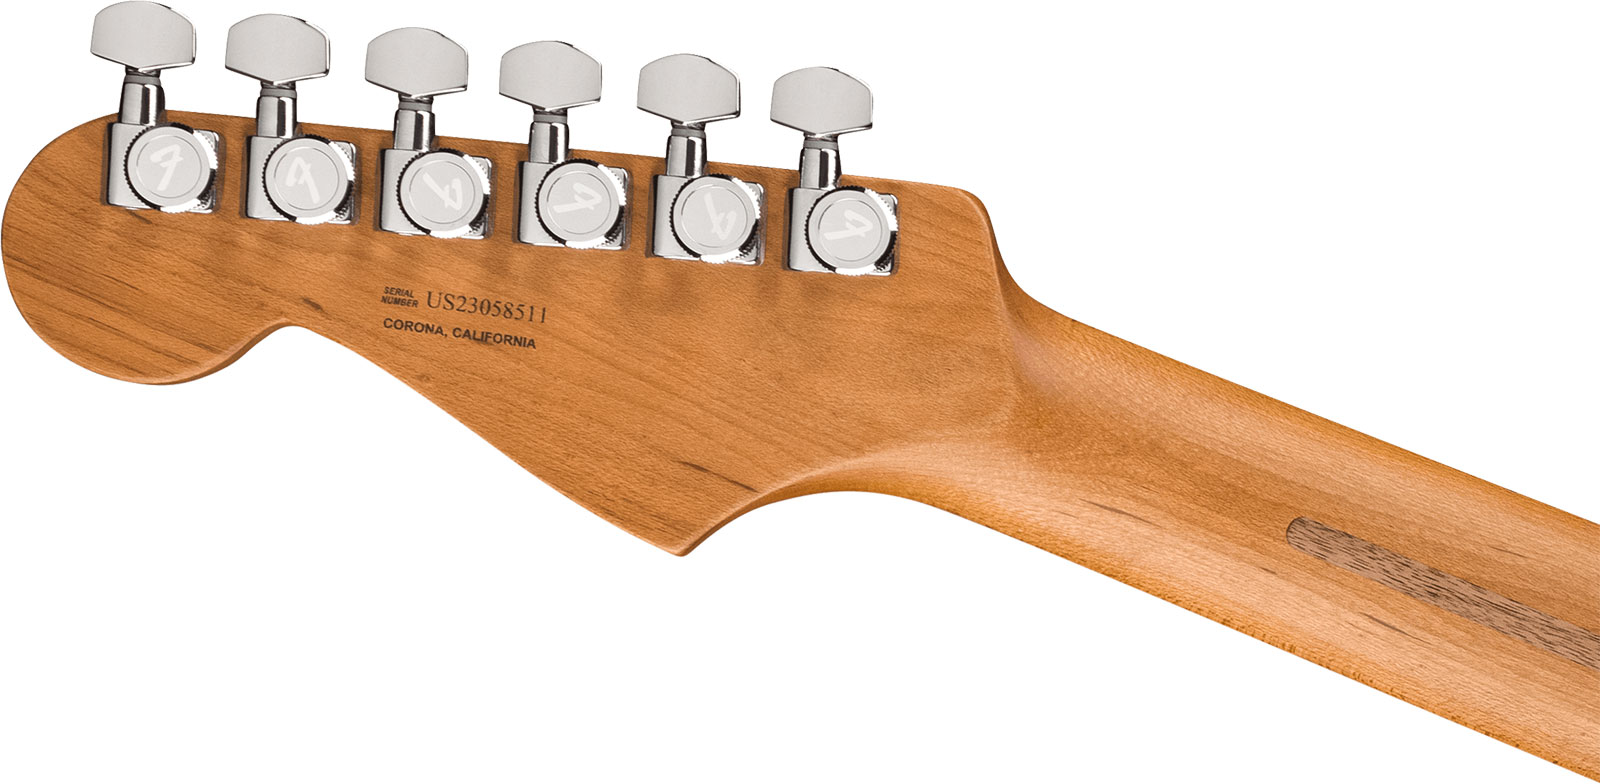 Fender Strat 70th Anniversary American Ultra Ltd Usa Hss Trem Mn - Amethyst - Str shape electric guitar - Variation 3